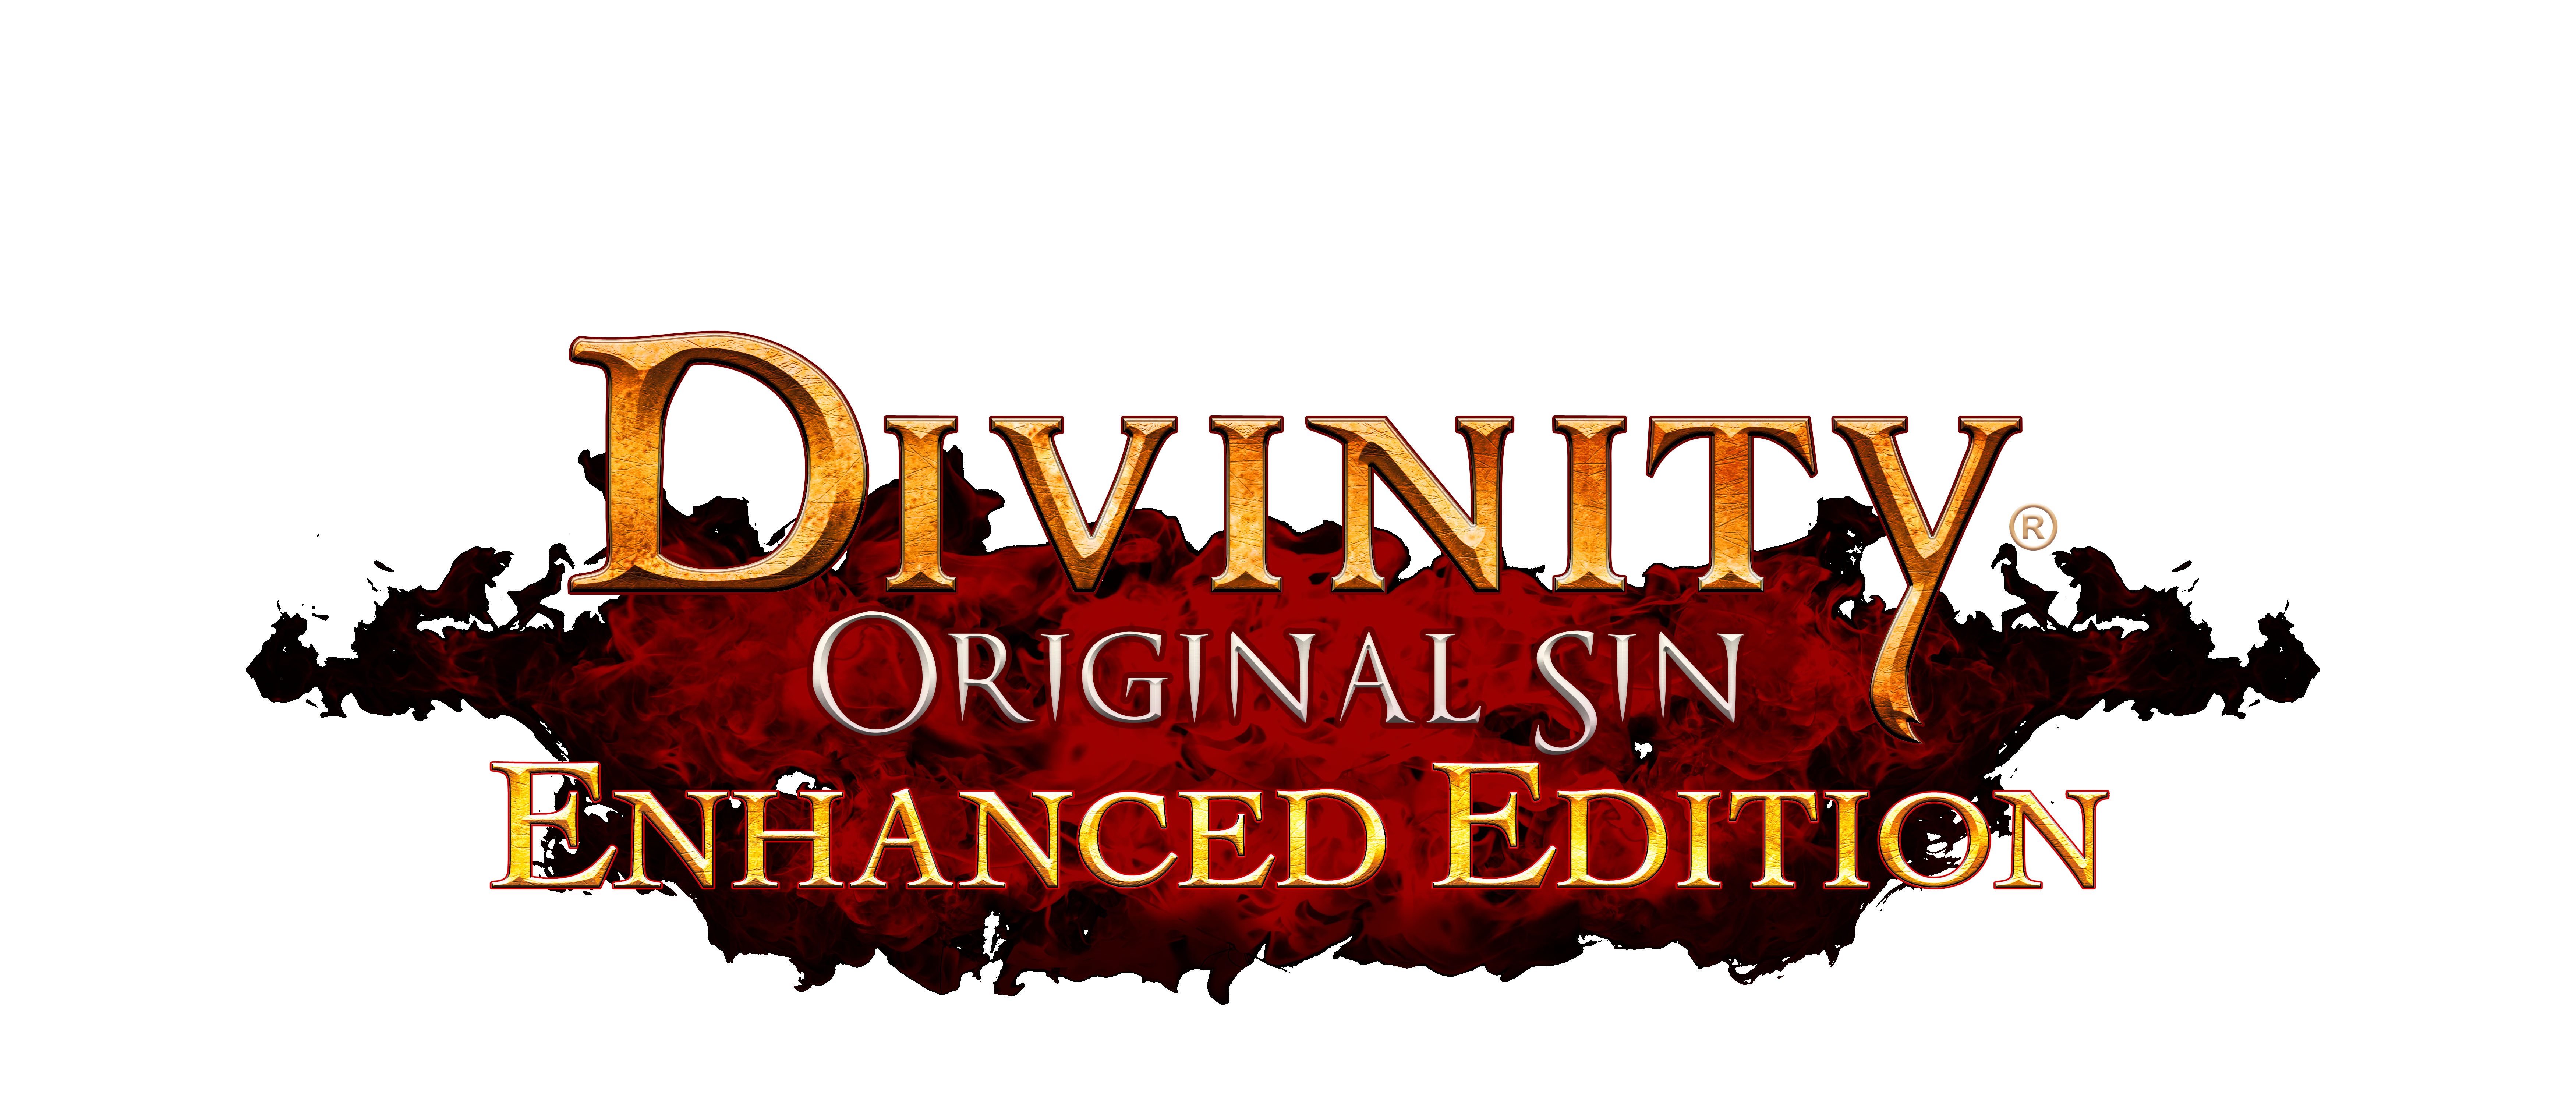 Divinity u2013 Original Sin. 